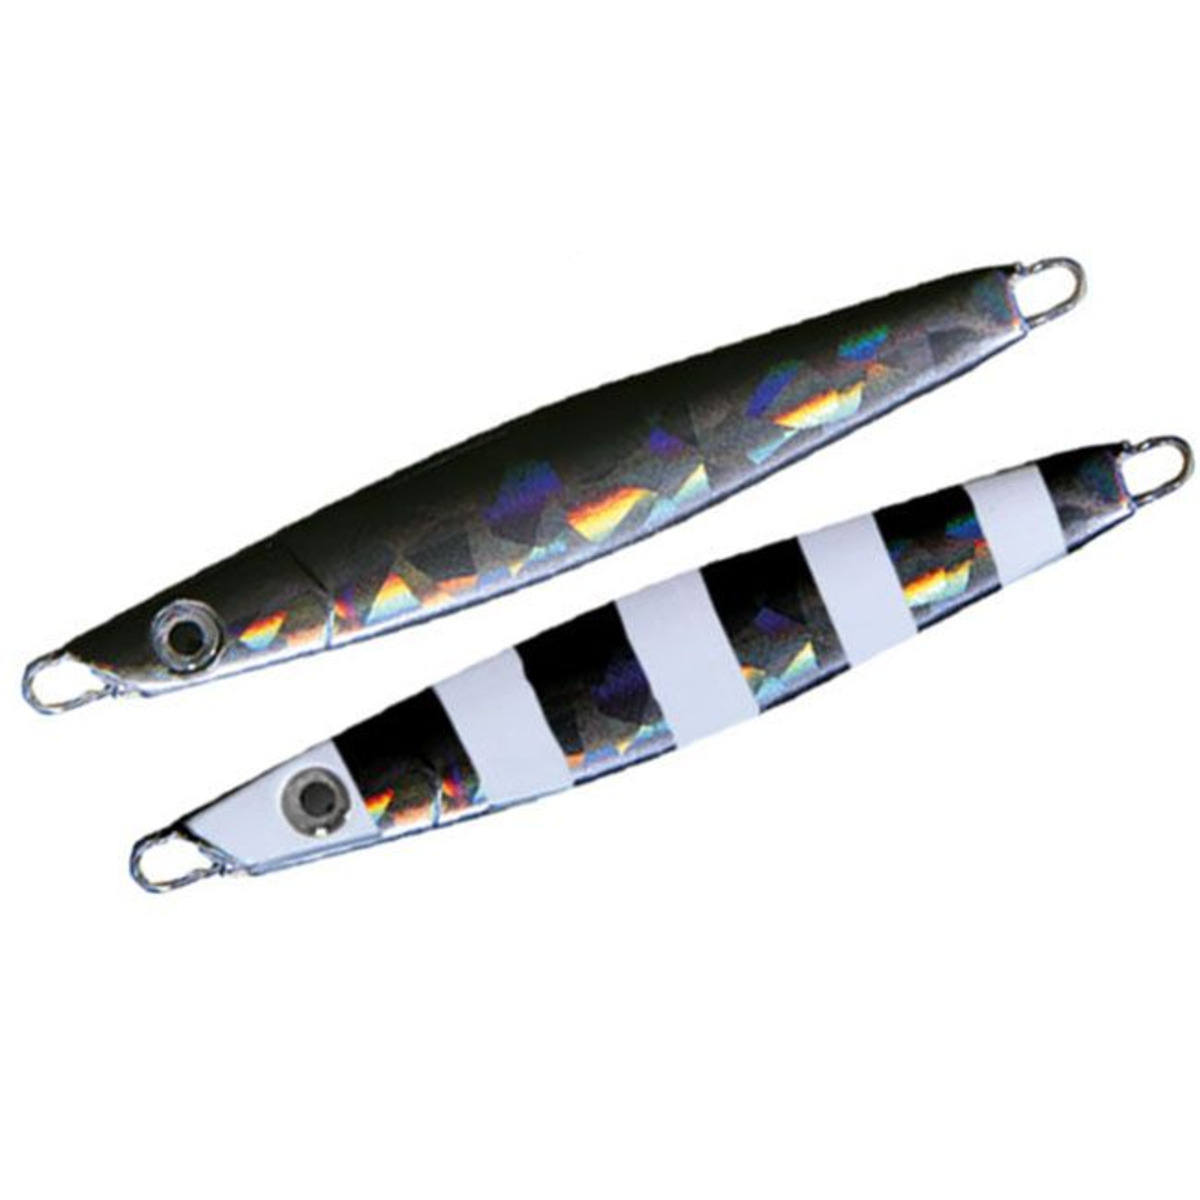 Nomura Sato Single Hook - 60 g - 11.0 cm - Silver Grey Stripes On Back